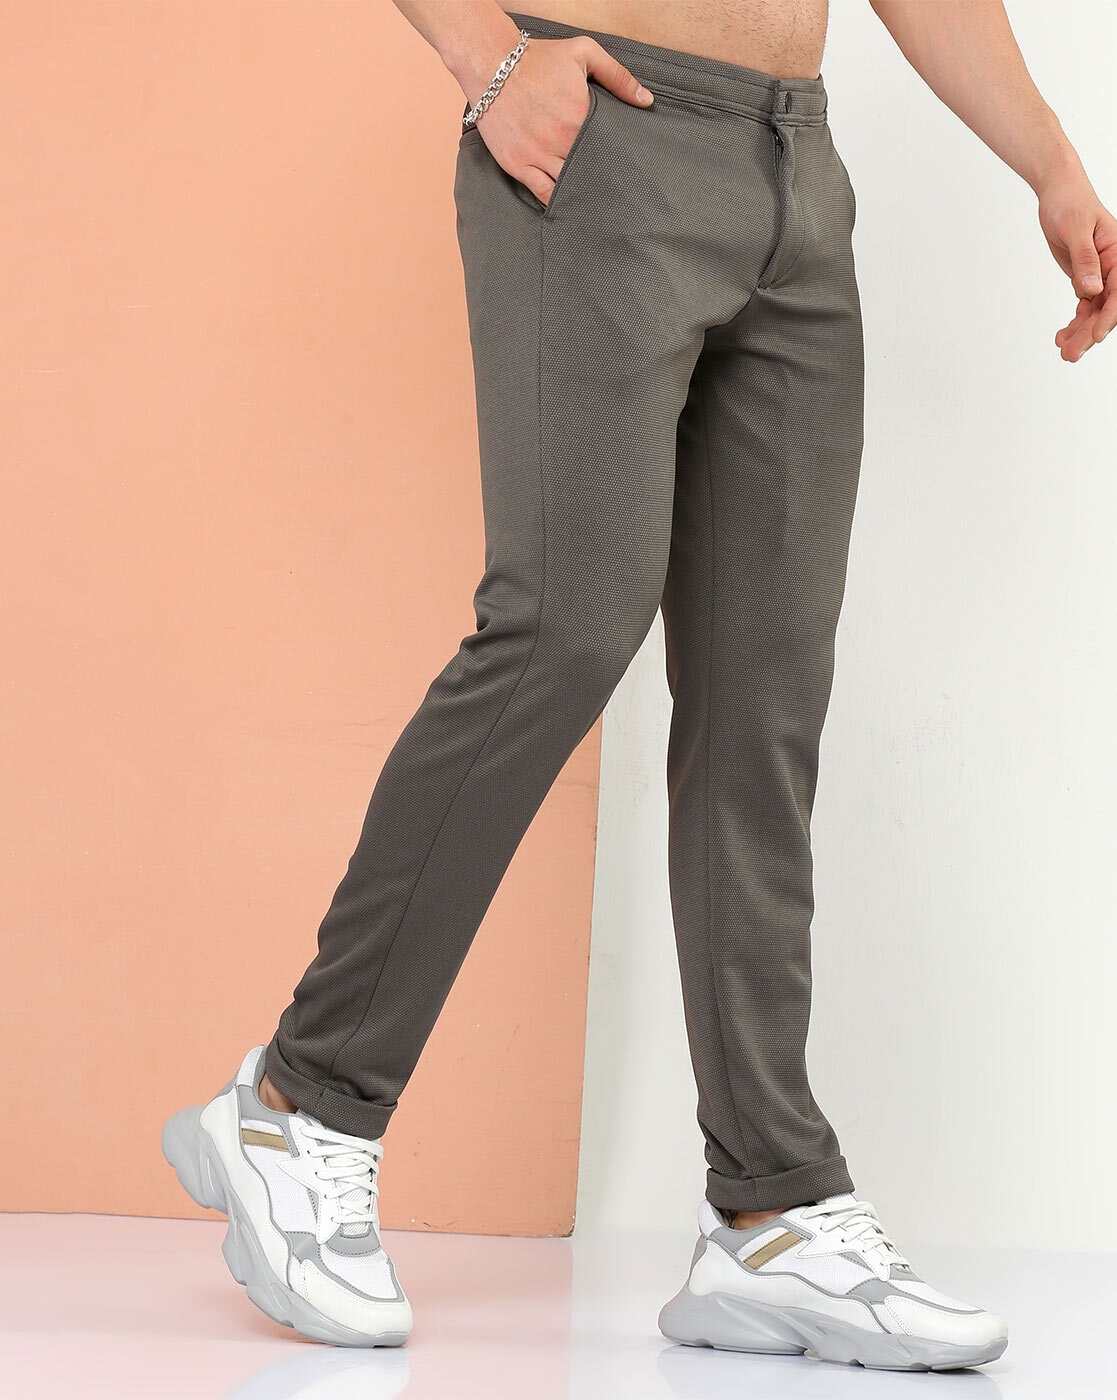 Mens Fashion | Outfit con pantaloni, Moda uomo, Moda